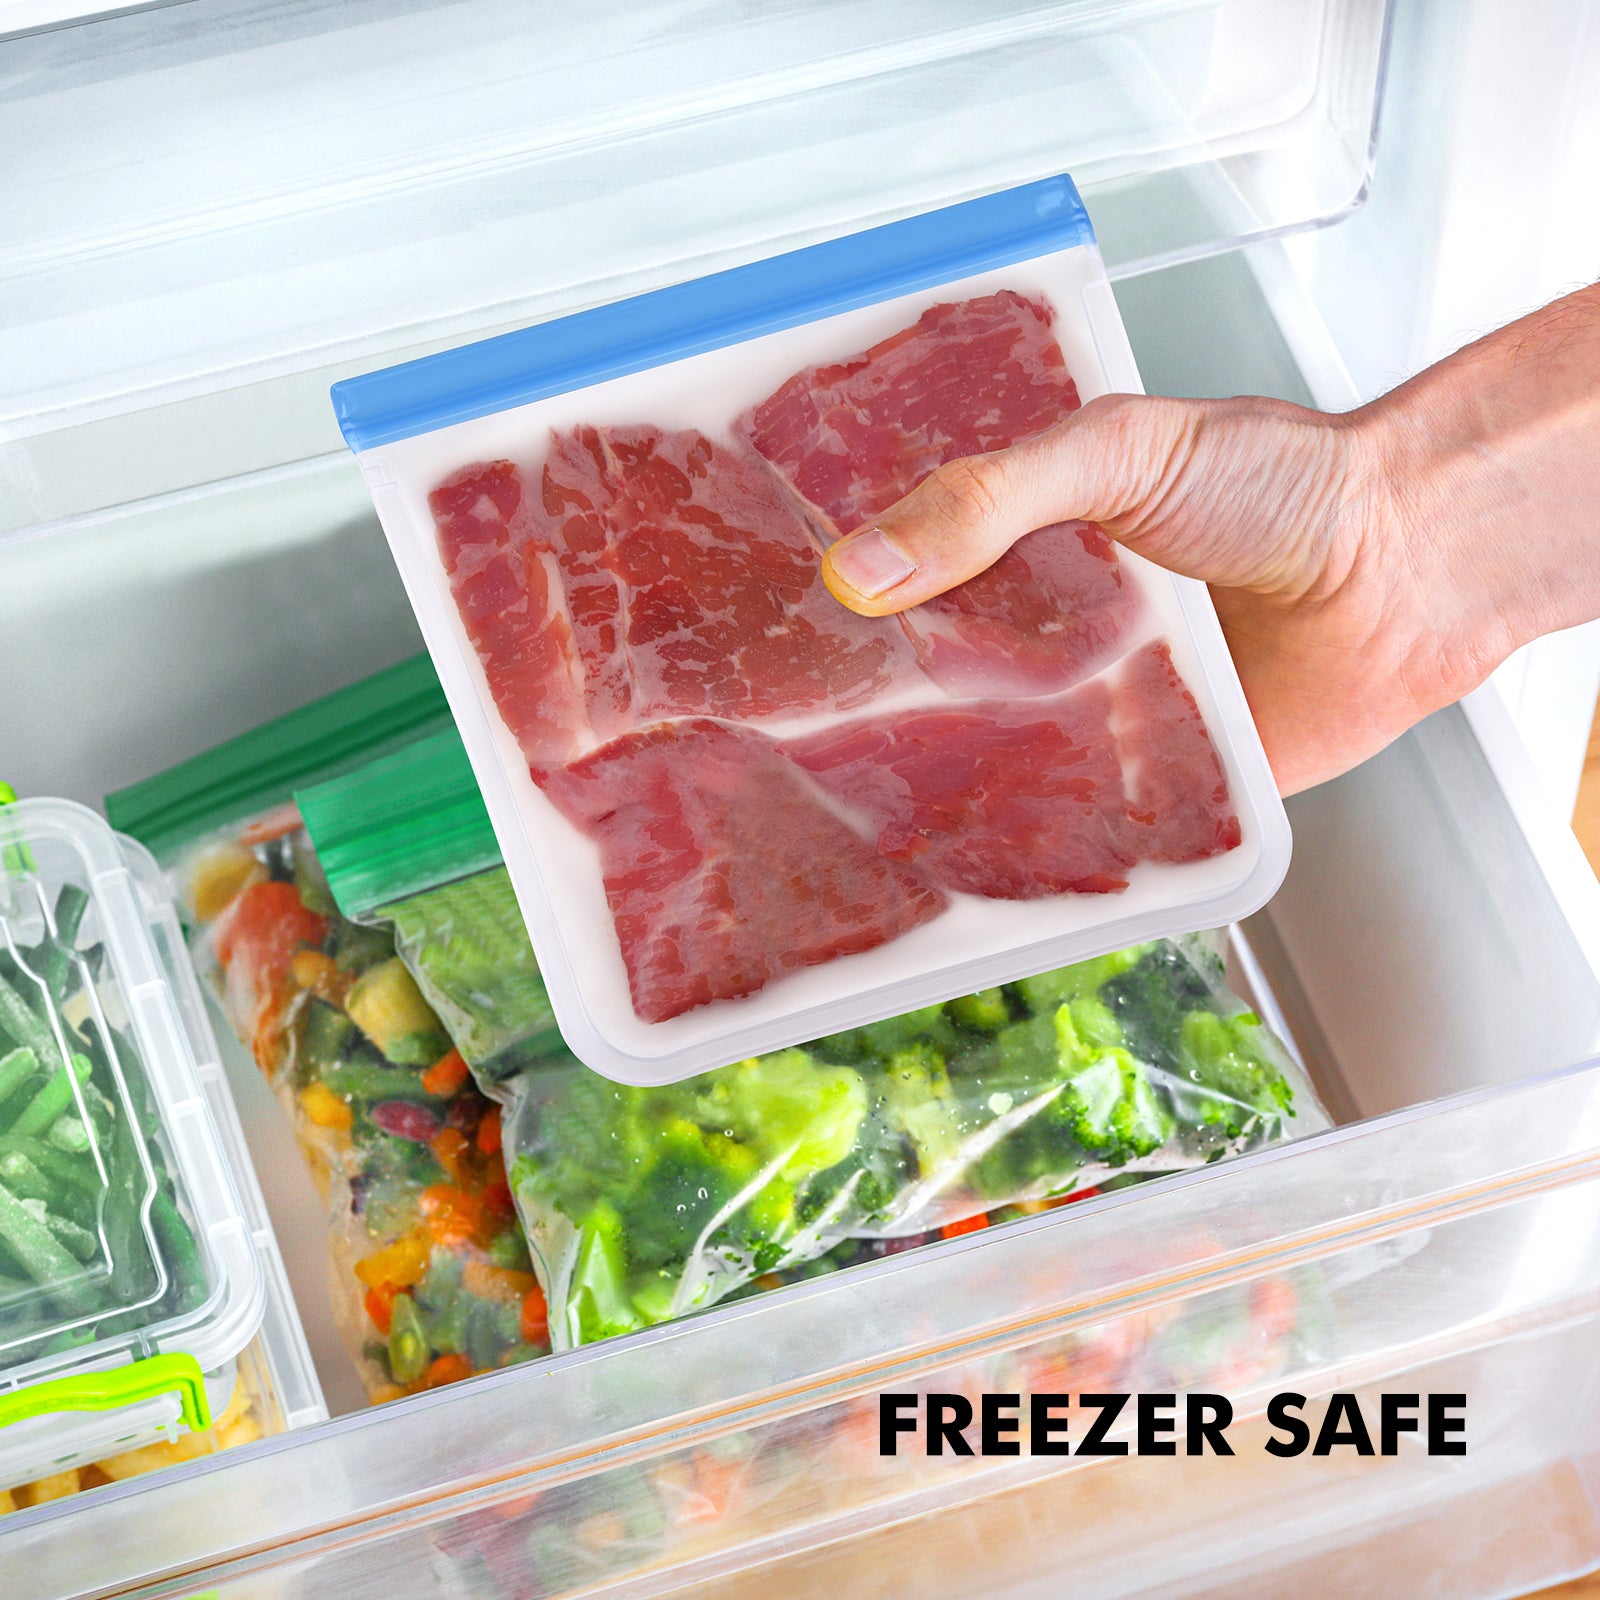 6pcs Reusable Freezer Gallon Bags Dishwasher Safe, Large Food